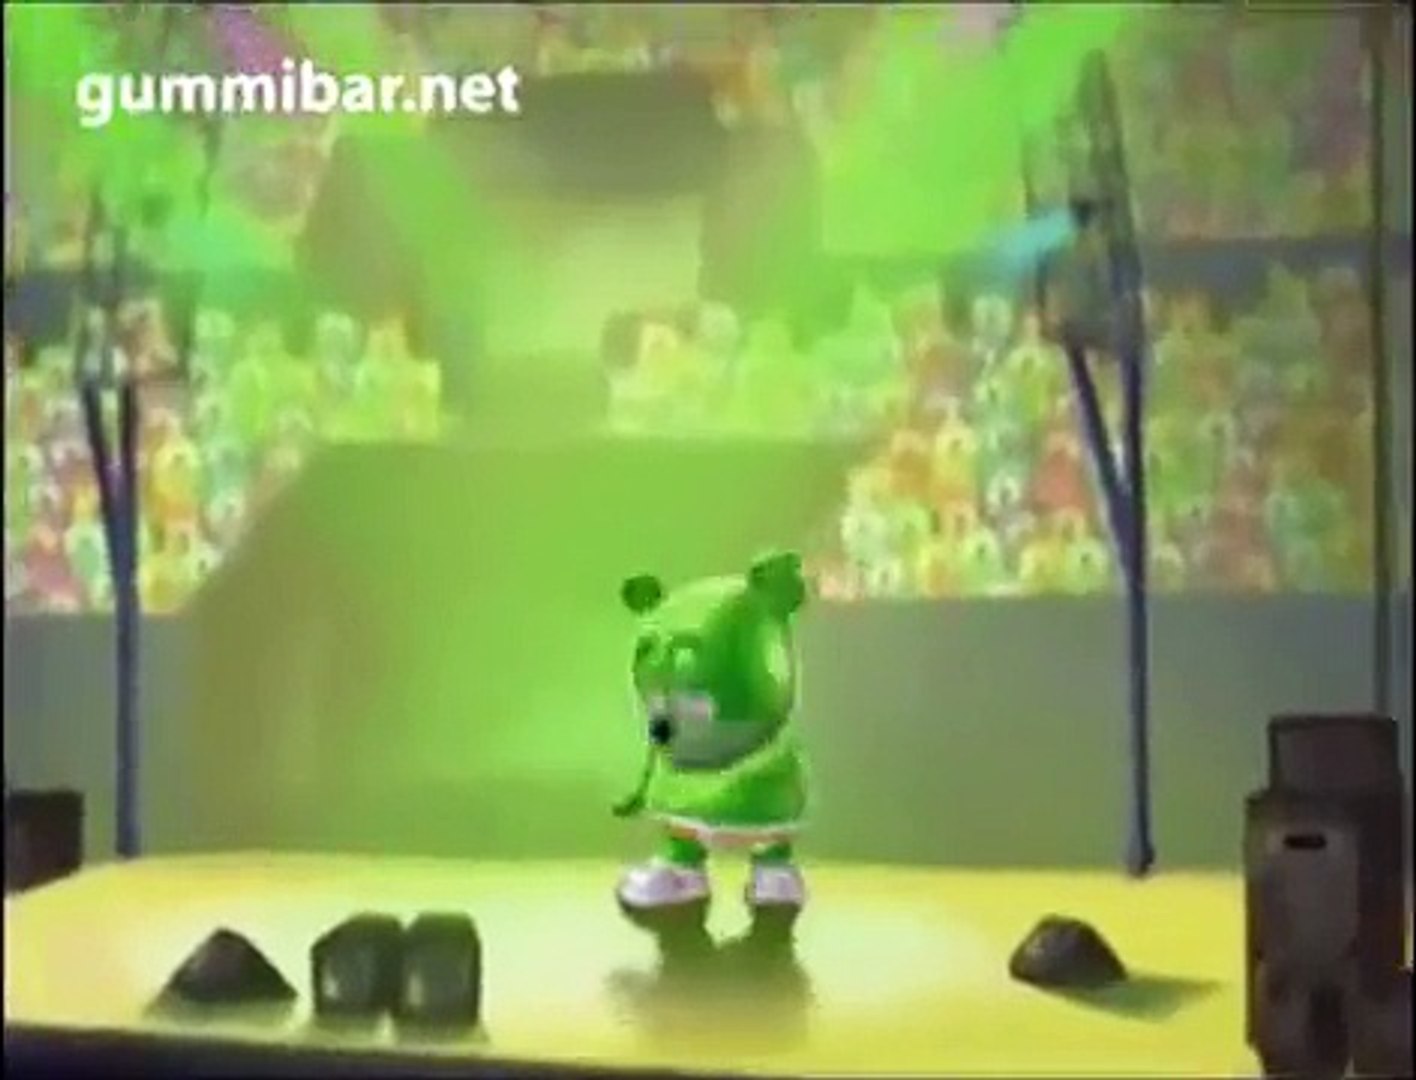 Osito Gominola - Full Spanish Version - The Gummy Bear Song - فيديو  Dailymotion